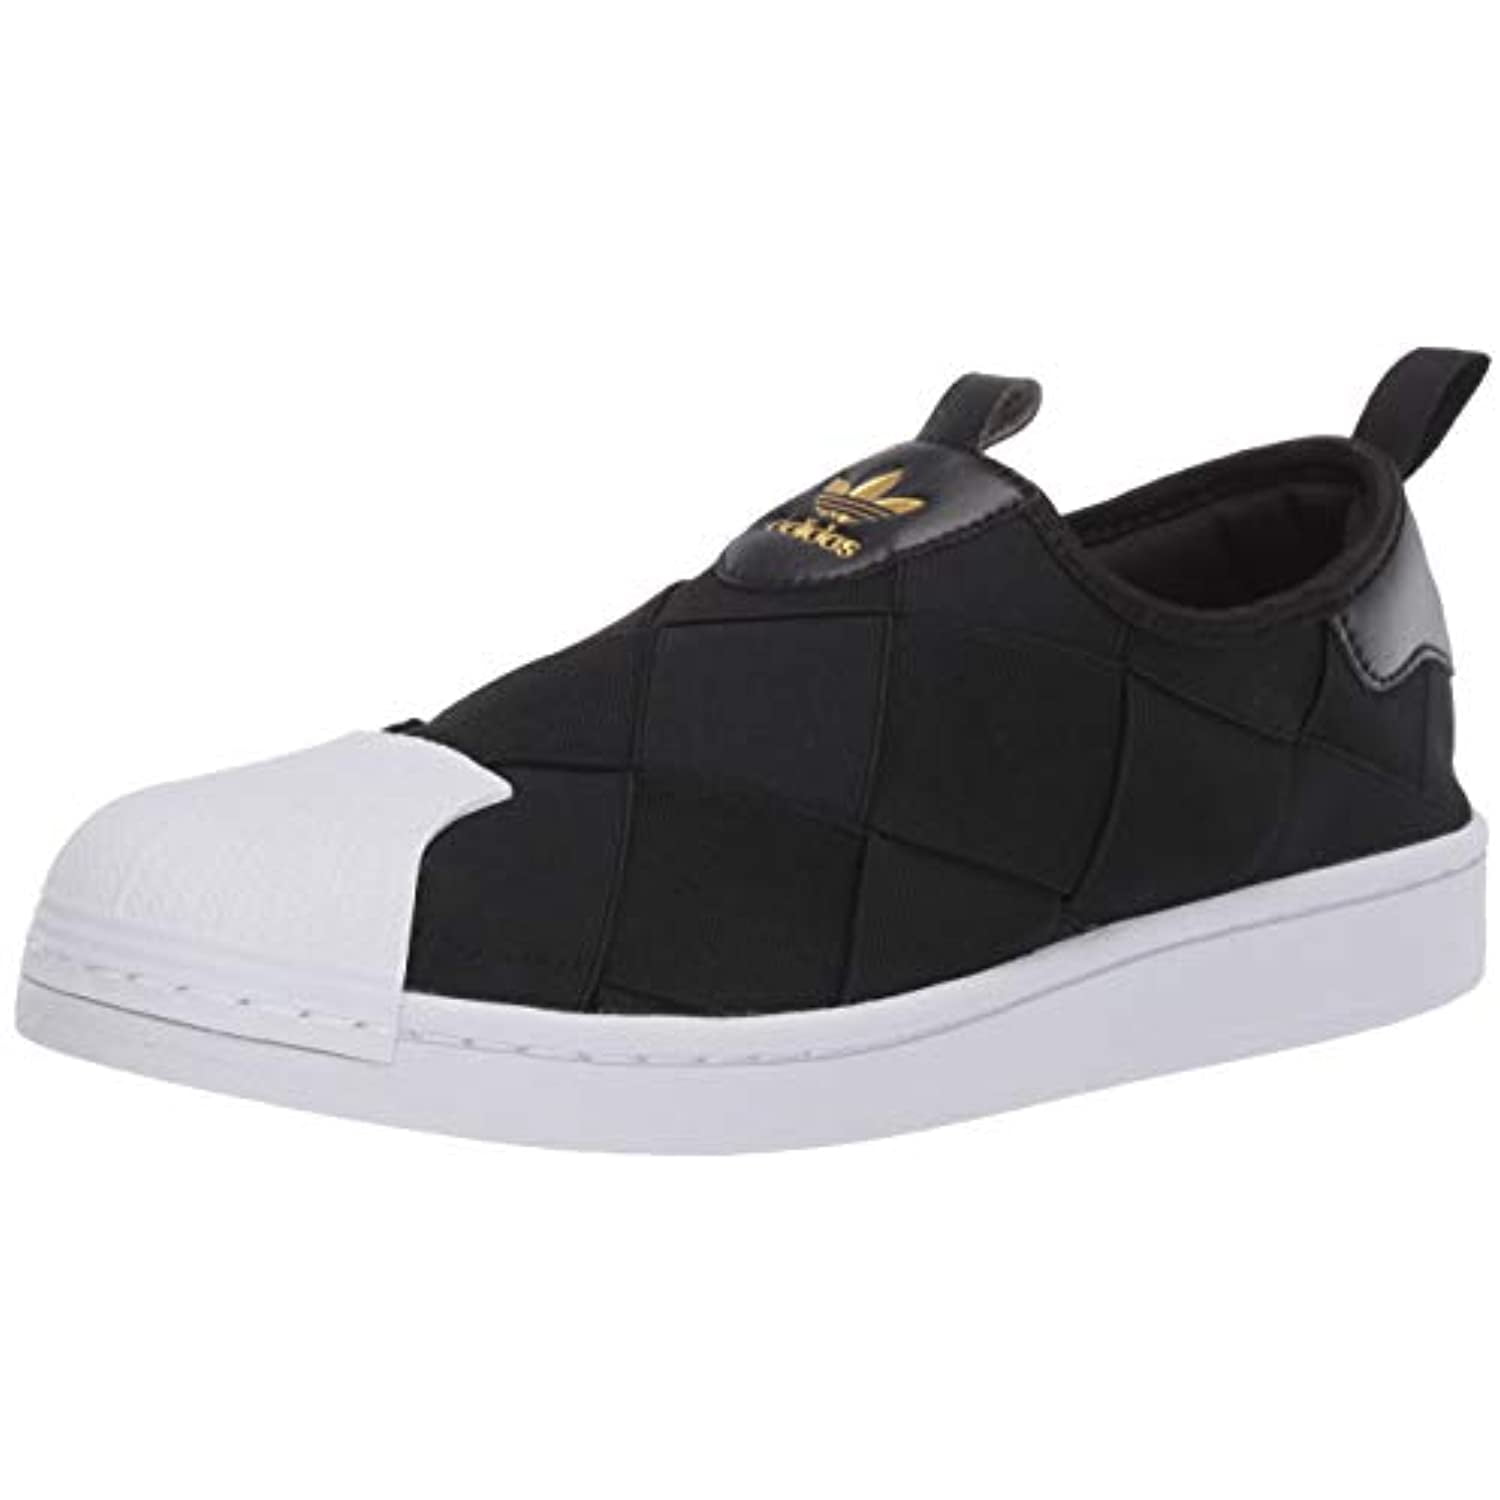 adidas Originals Women's Shoes Black/White/Gold Metallic, 6.5 - Walmart.com